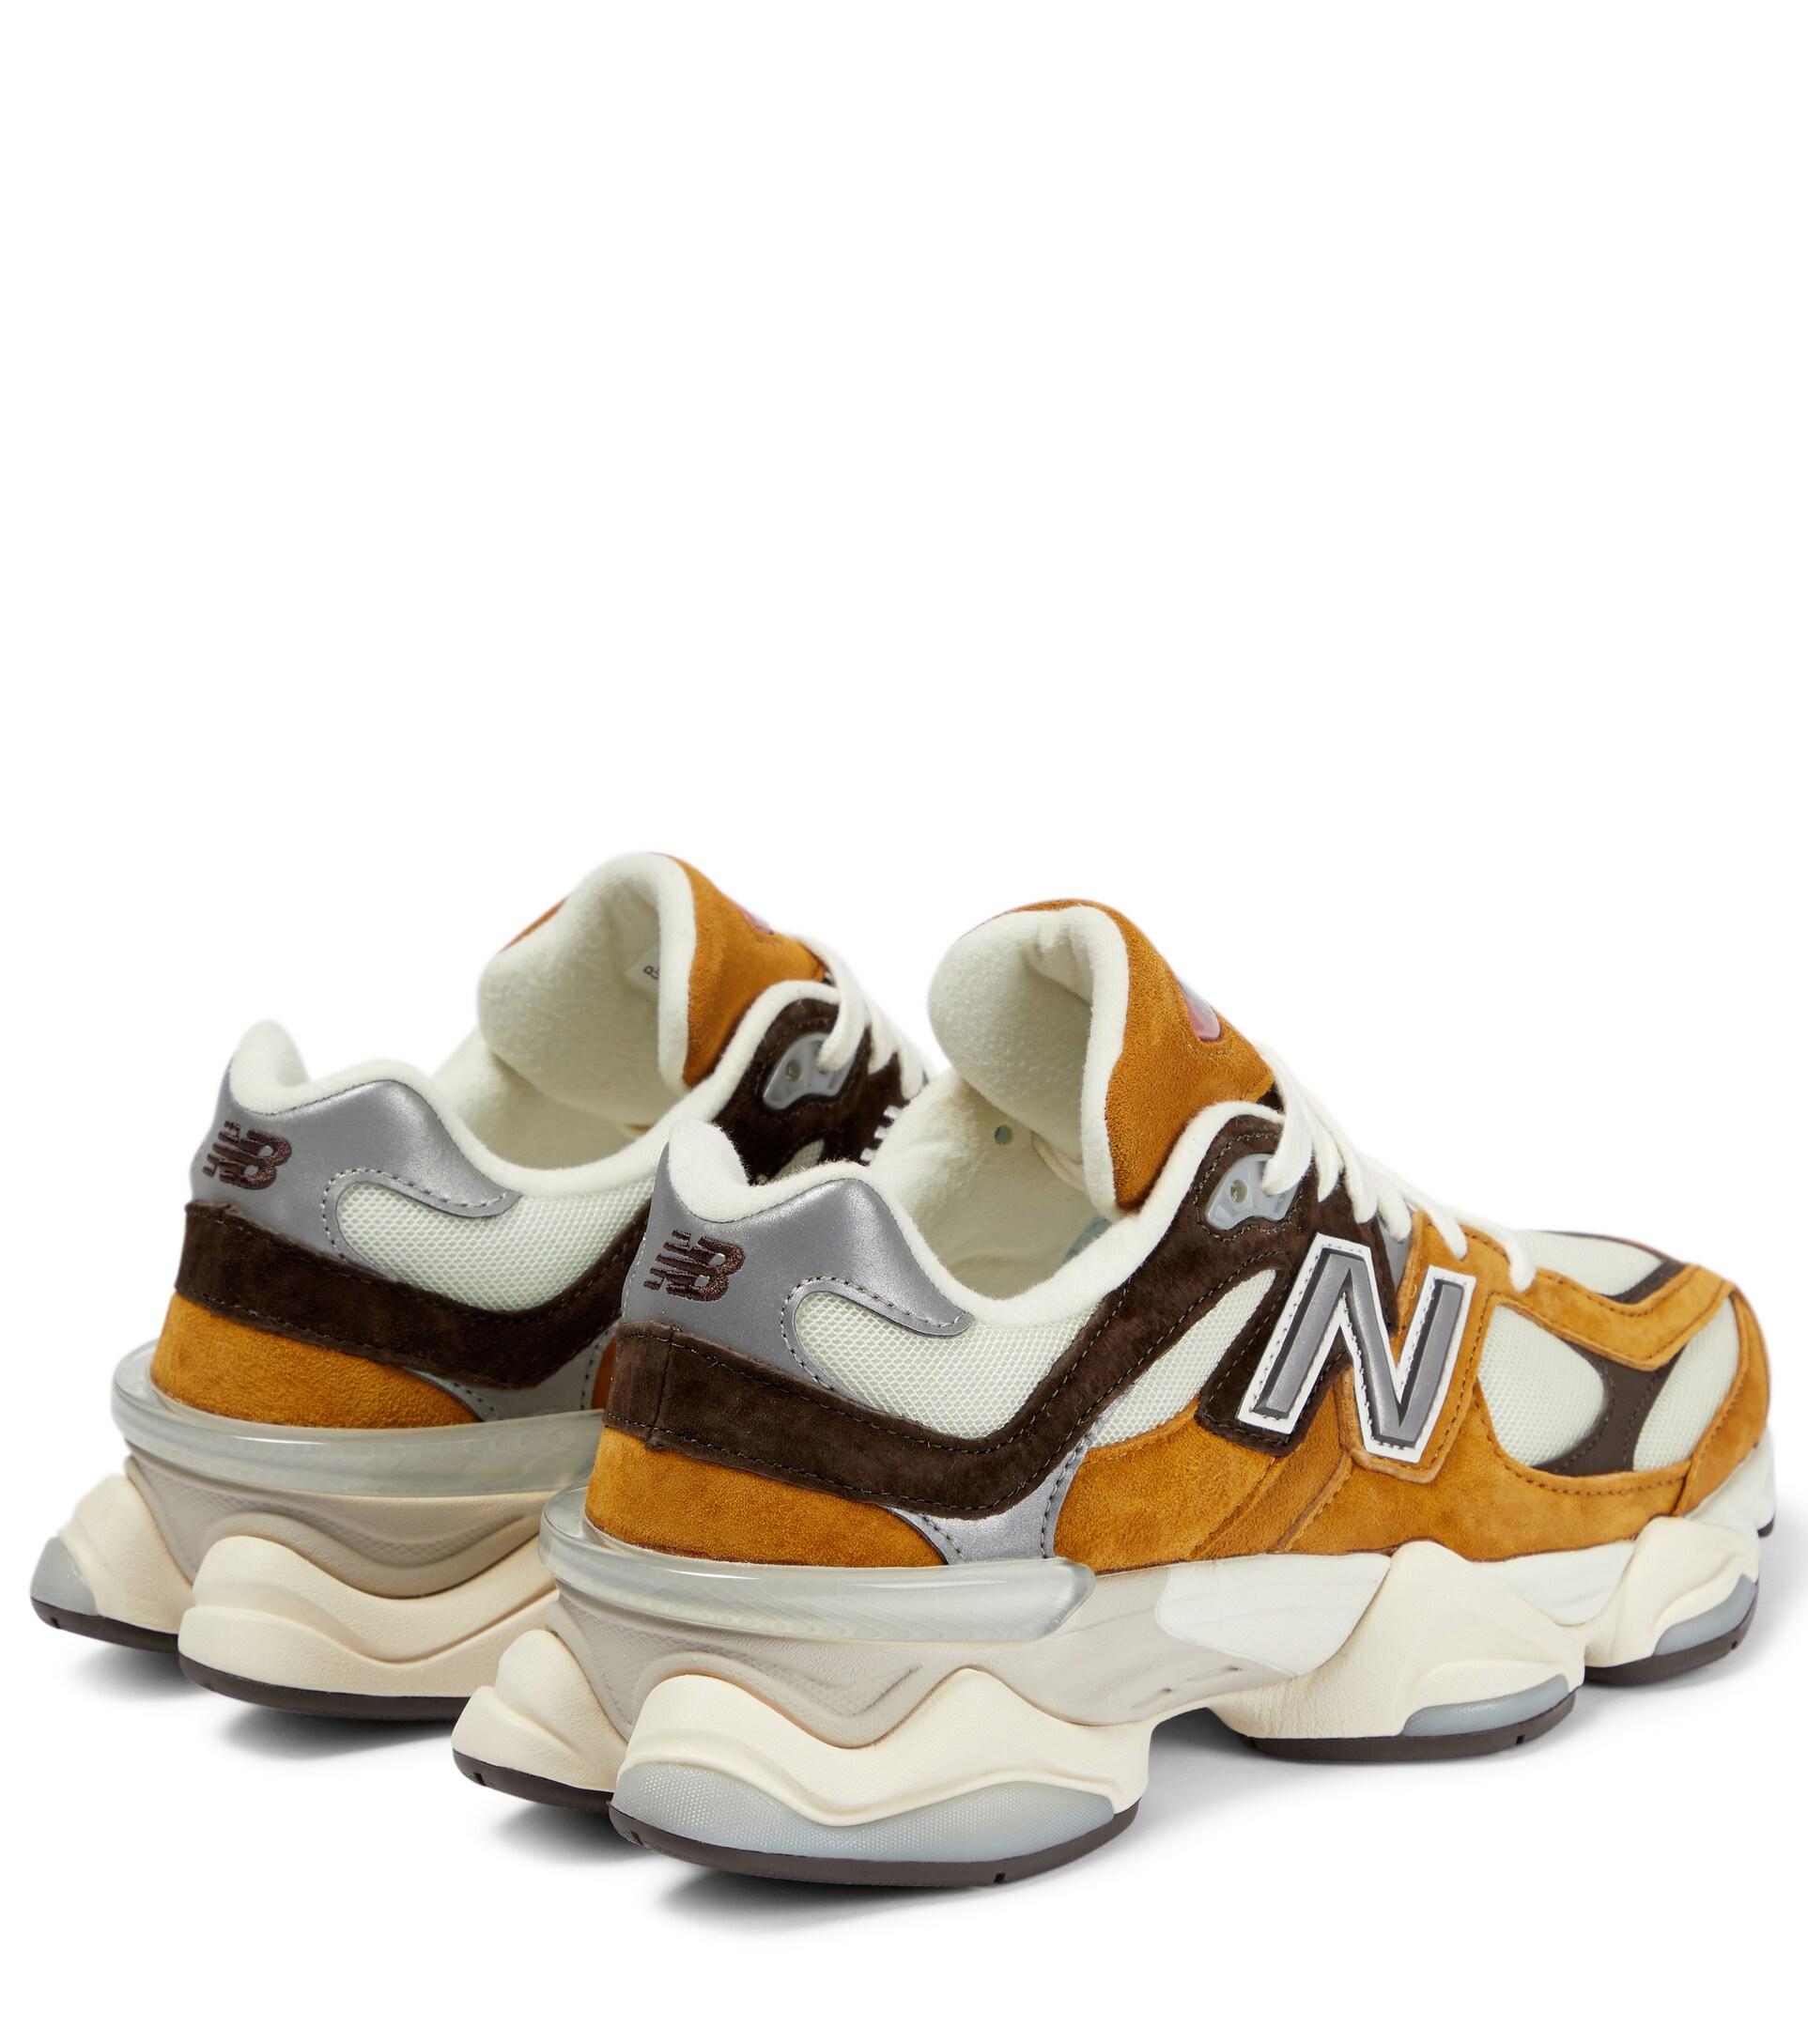 New Balance 9060 Sneakers in Metallic | Lyst